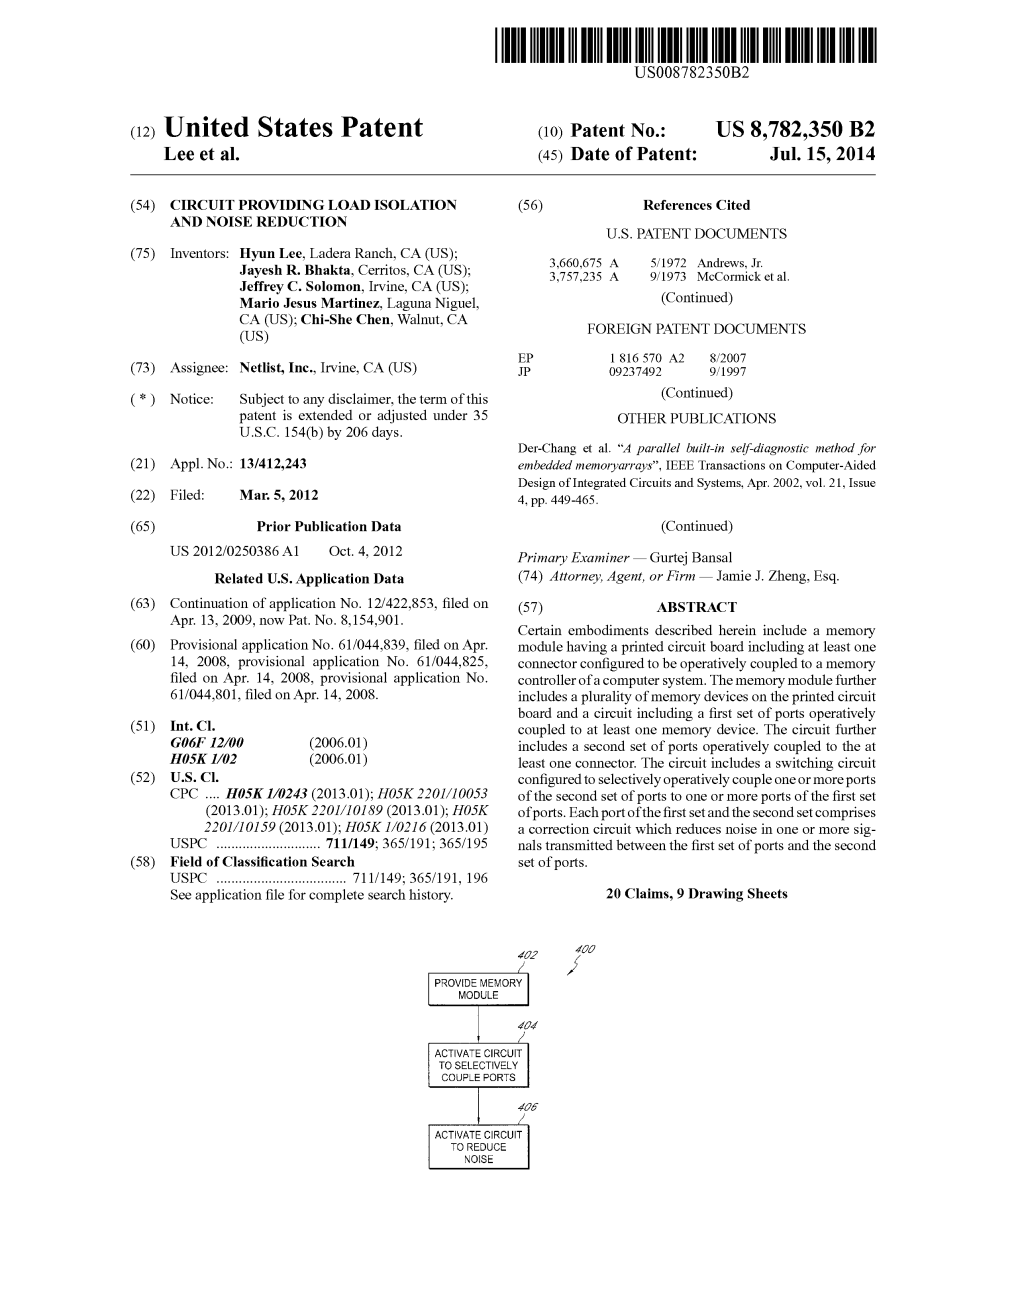 (12) United States Patent (10) Patent No.: US 8,782,350 B2 Lee Et Al